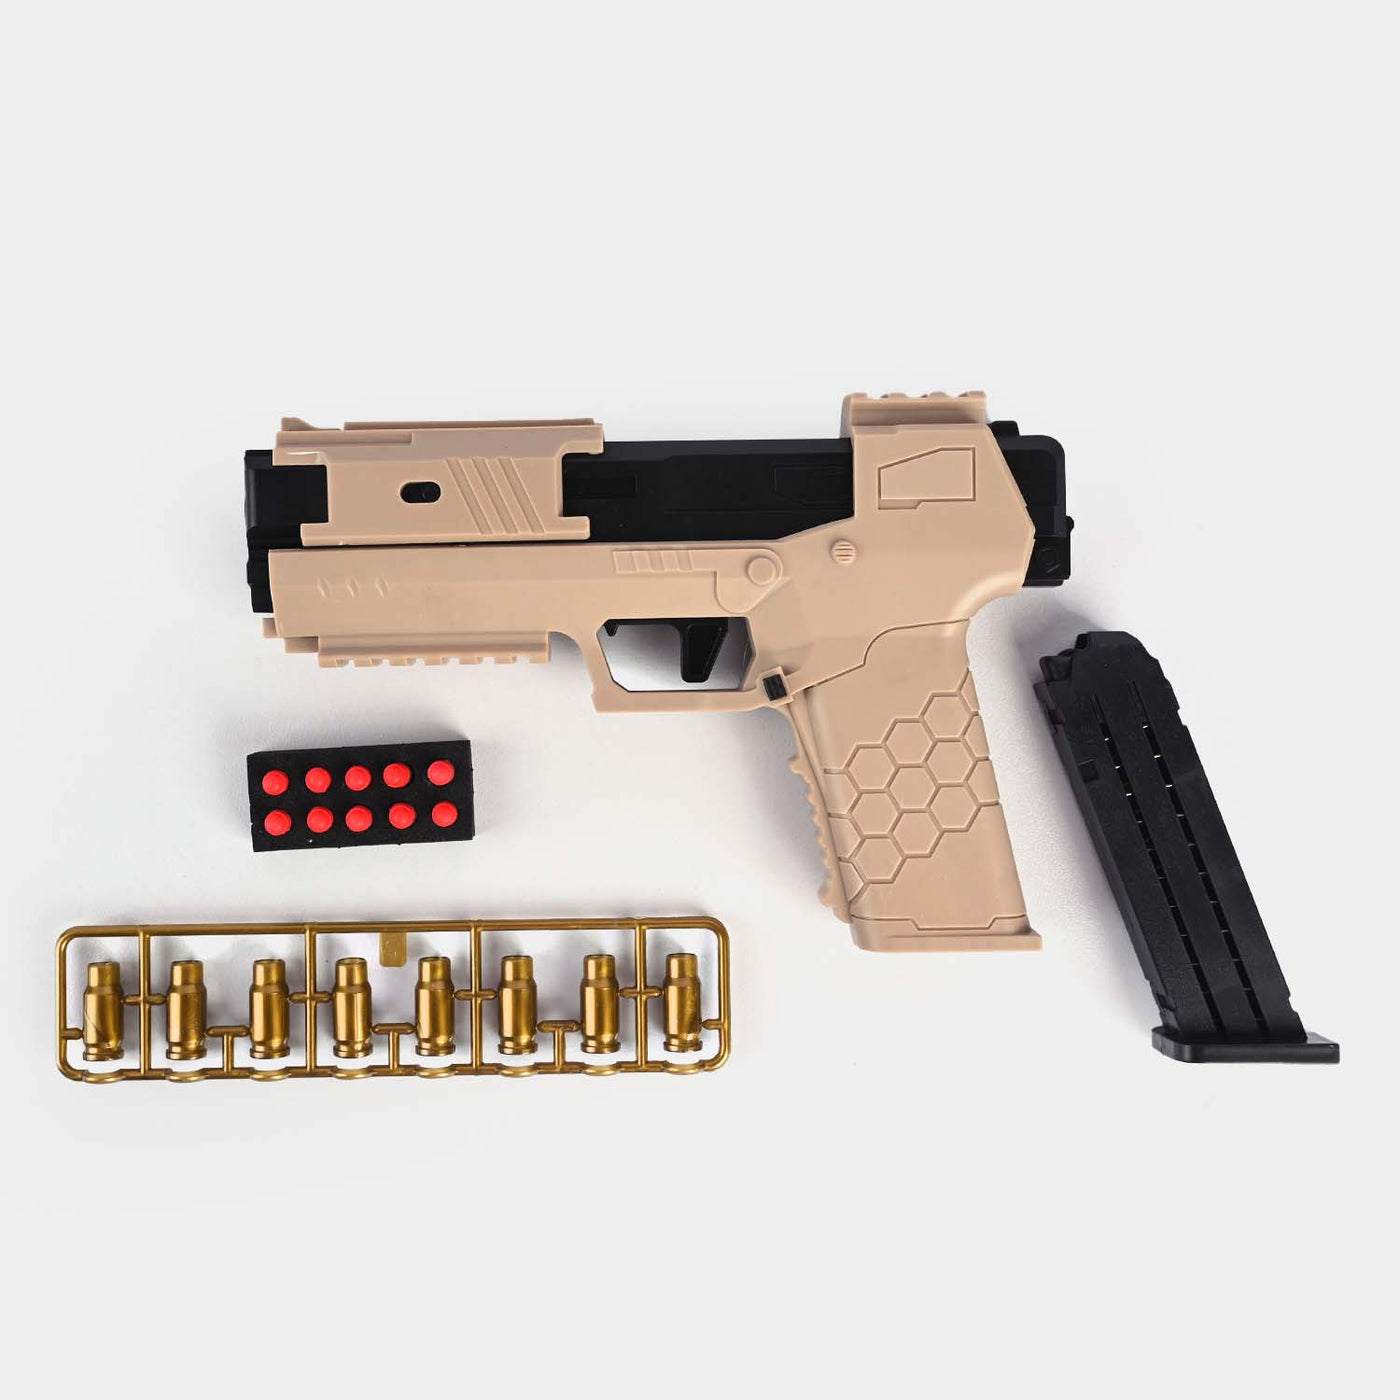 Manual Soft Bullet Gun Shell Case Toy For Kids